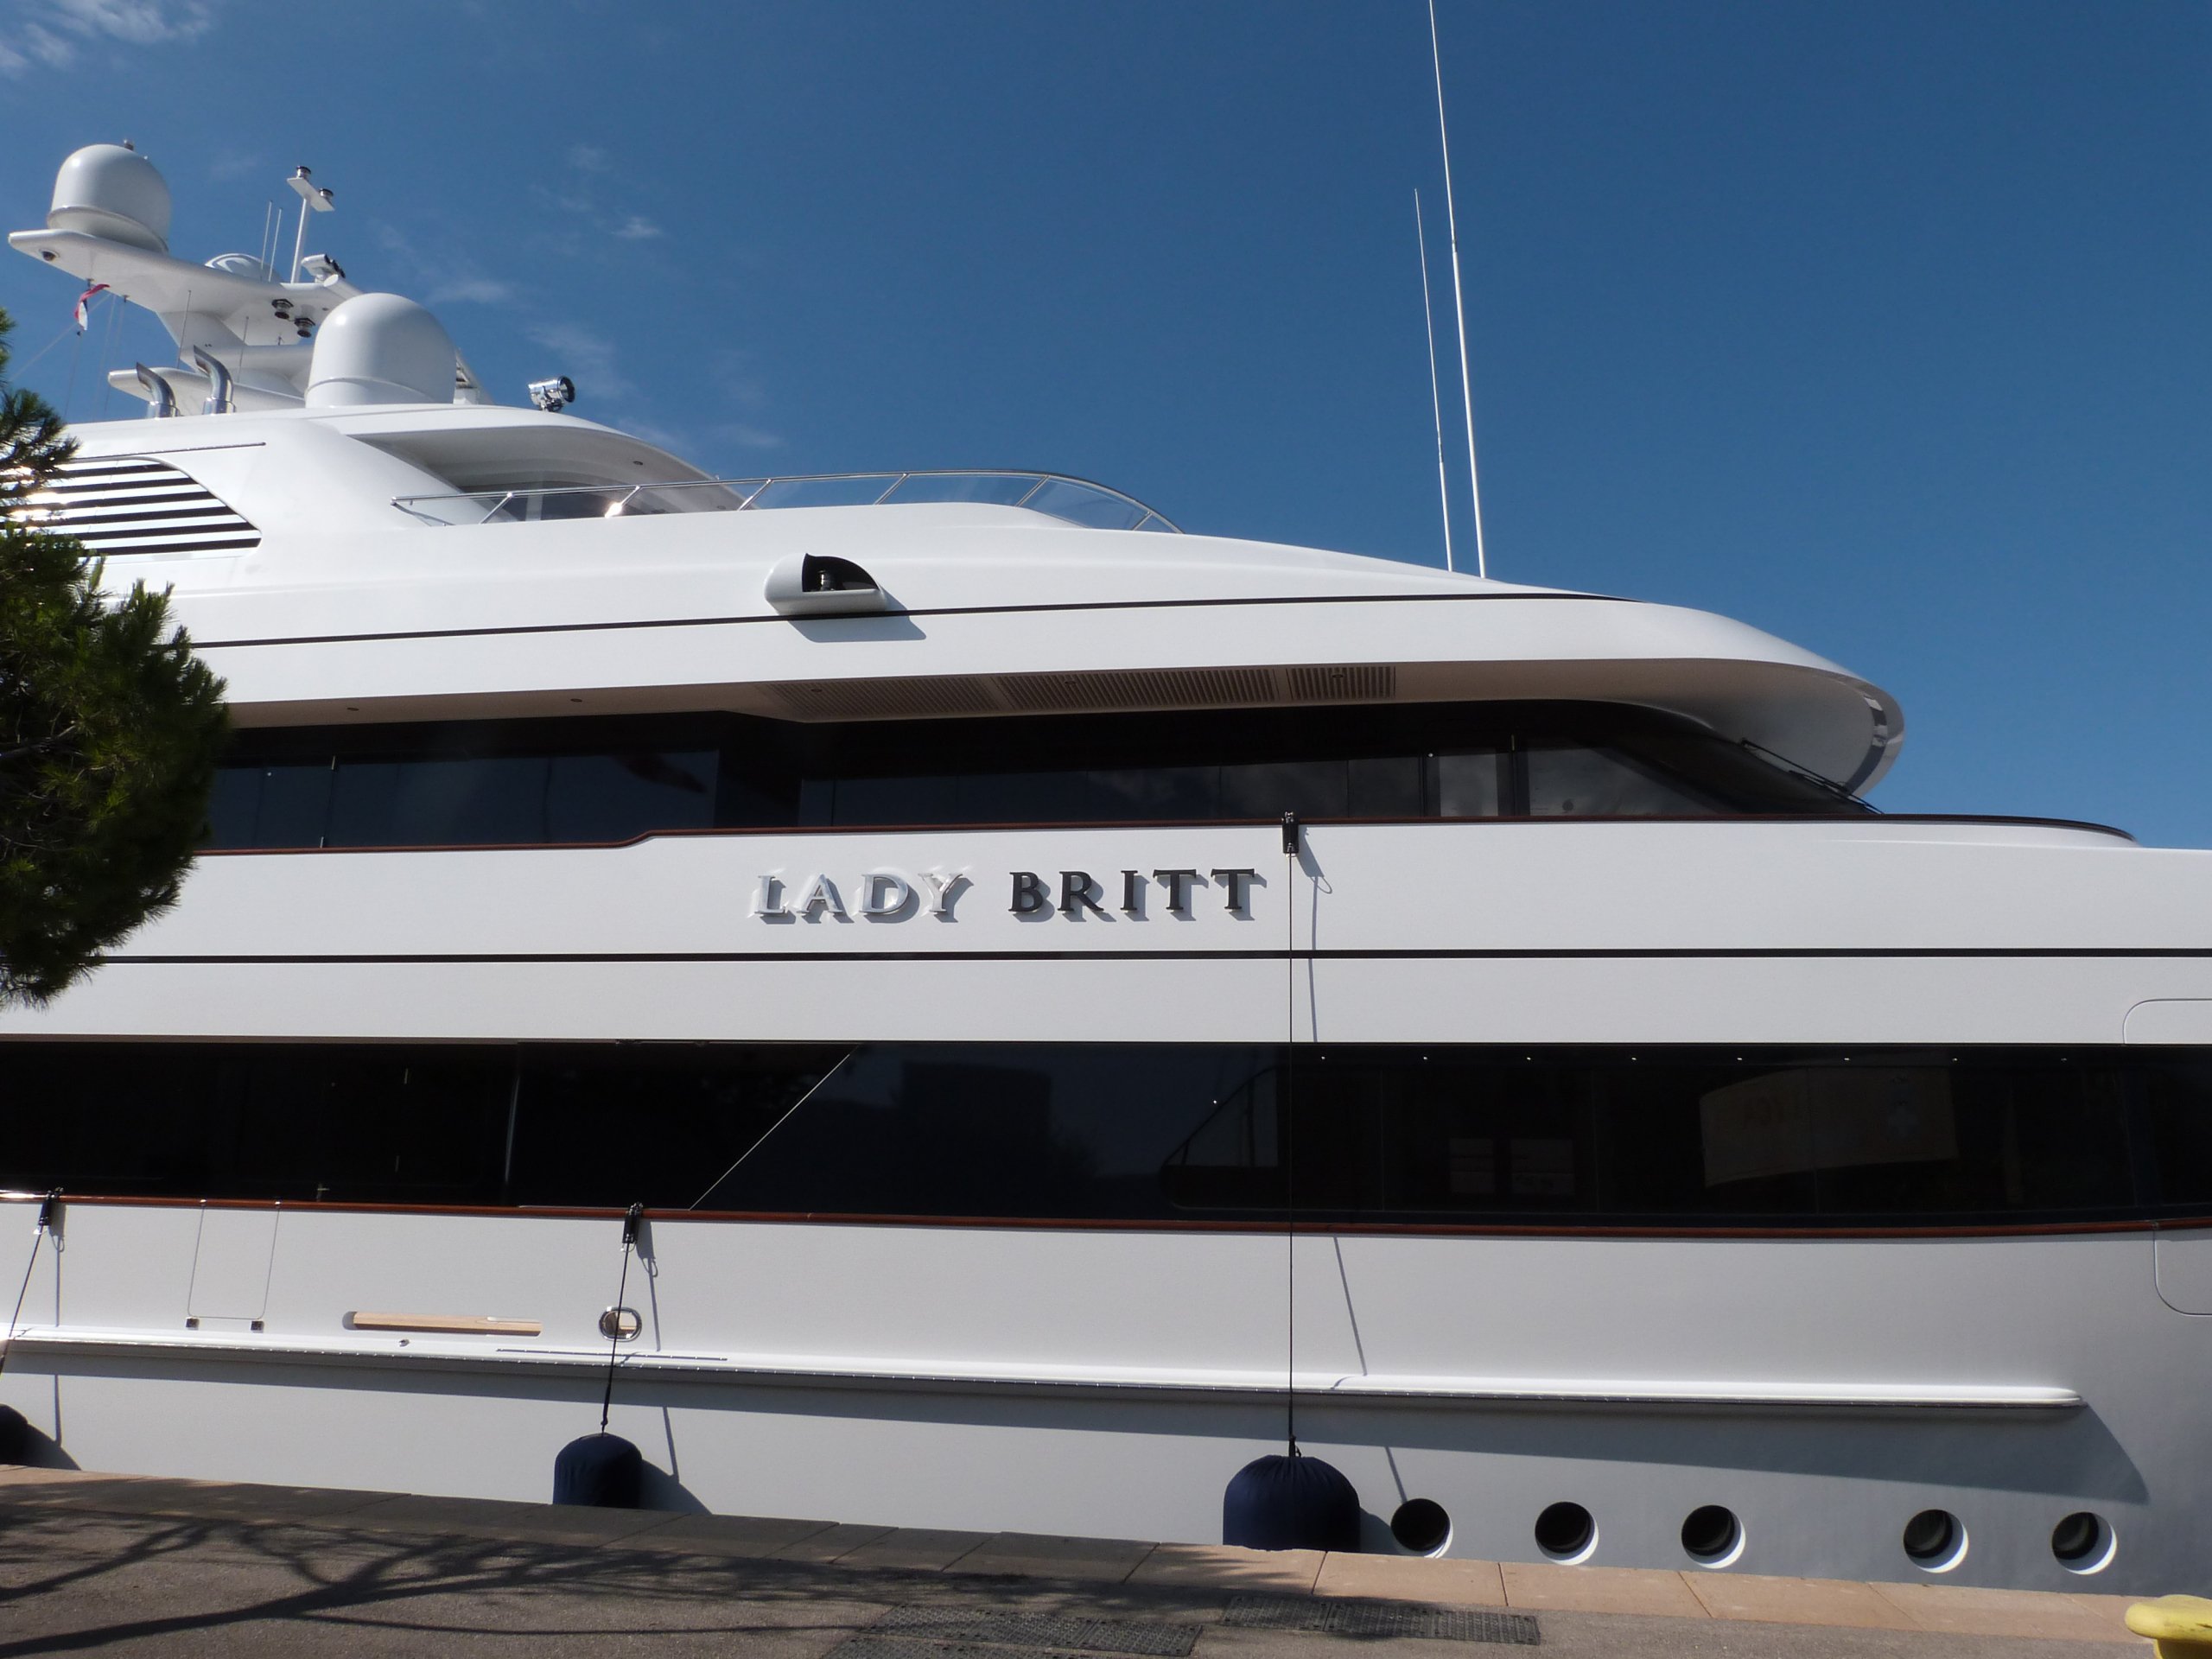 Яхта LADY BRITT • Feadship • 2011 г. • Владелец Стен Уорборн